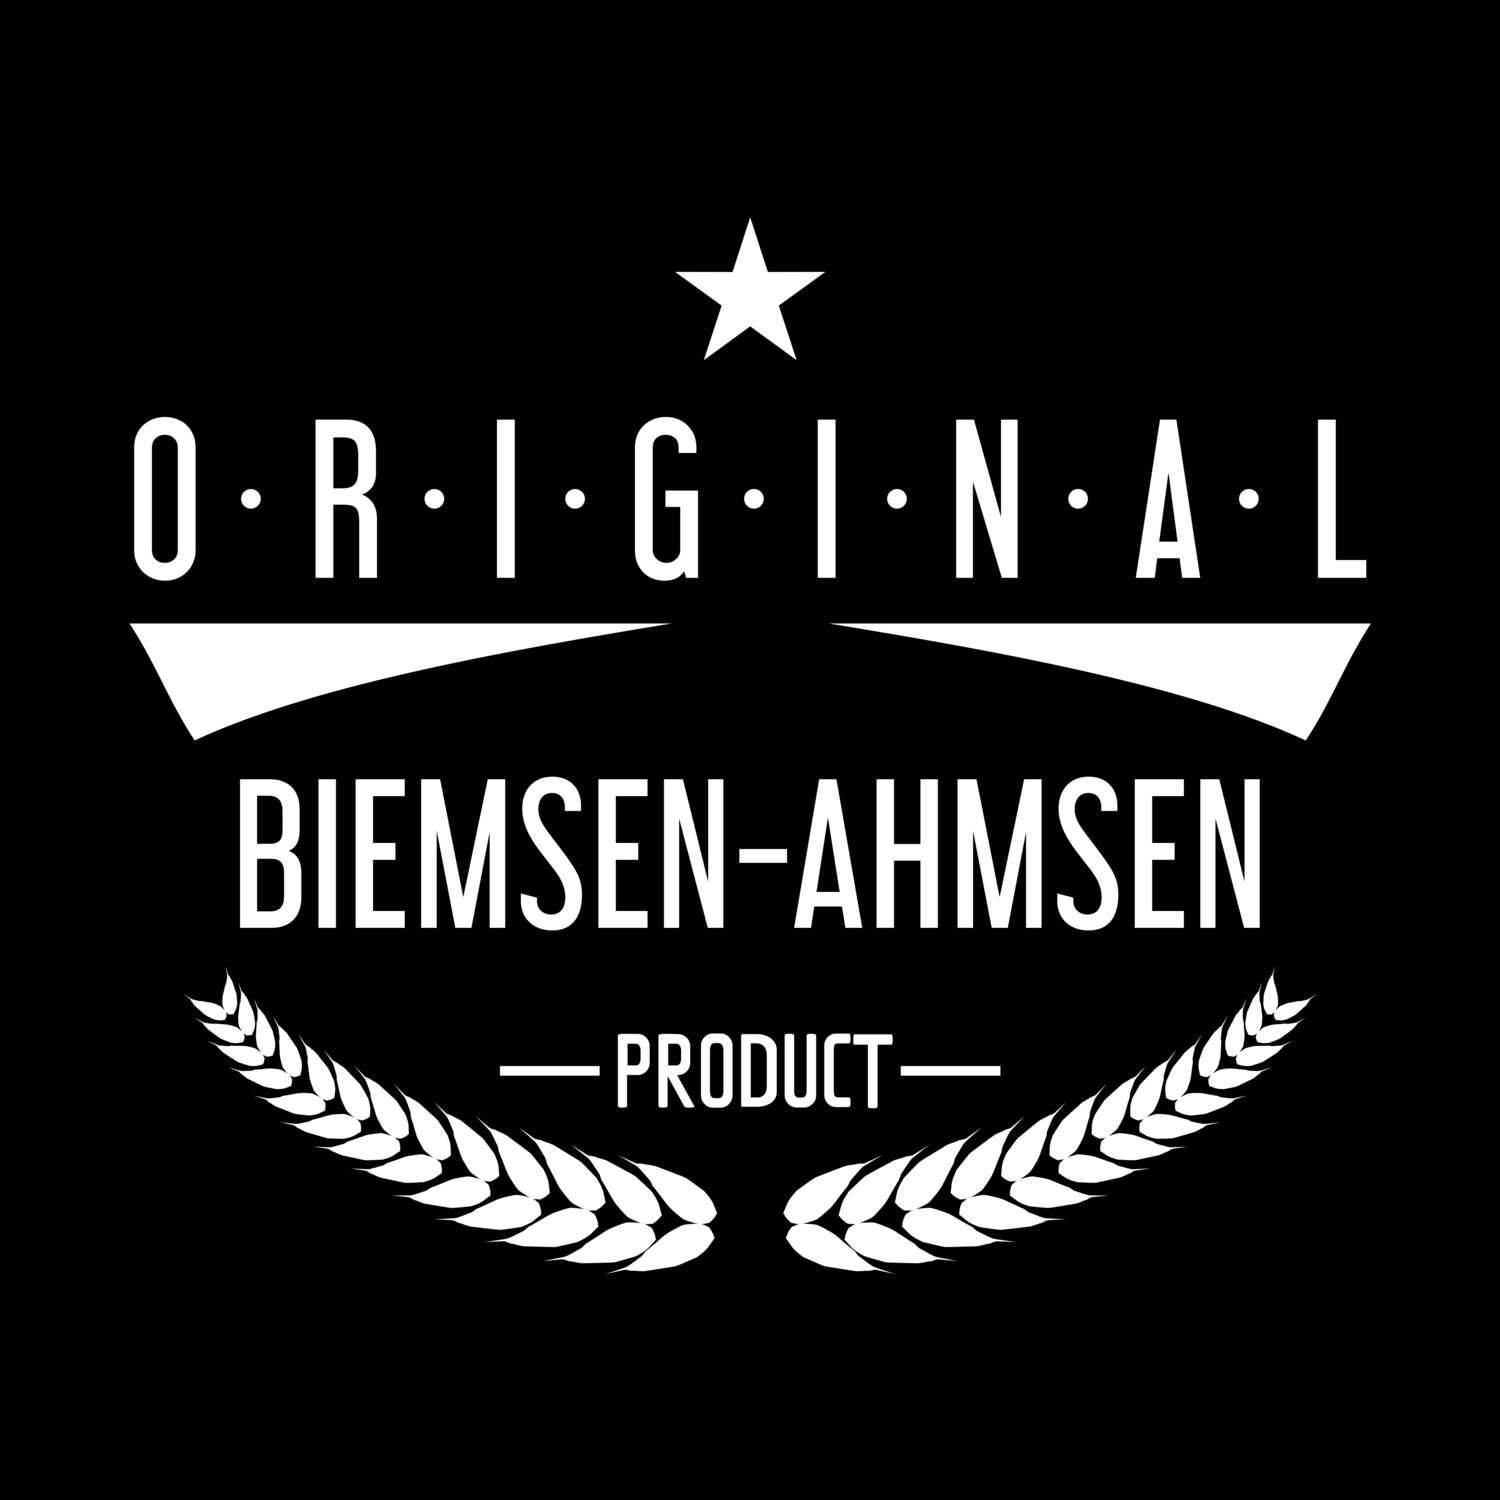 Biemsen-Ahmsen T-Shirt »Original Product«